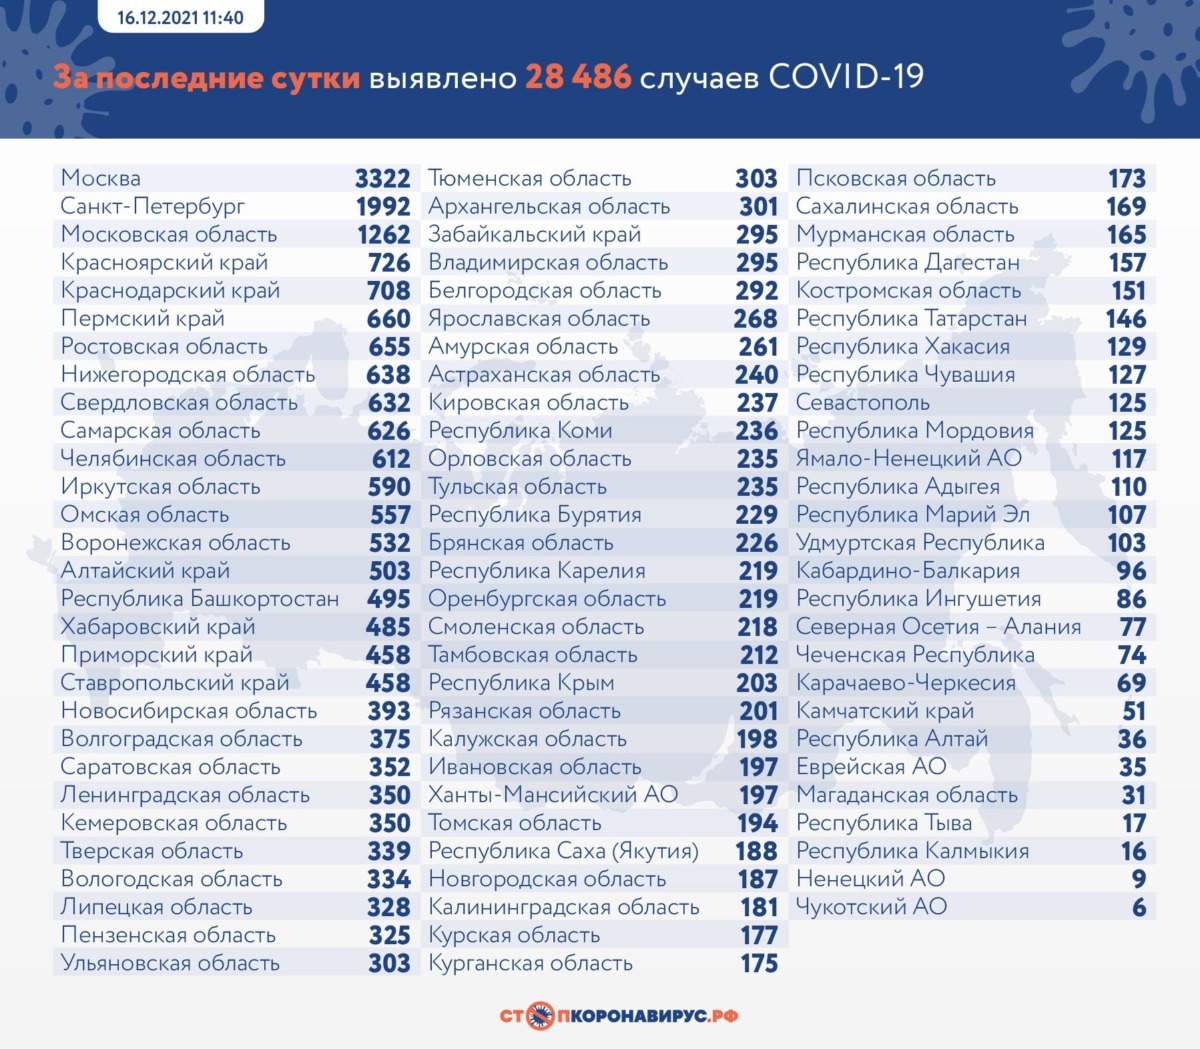 Оперативная статистика по коронавирусу в России на 16 декабря